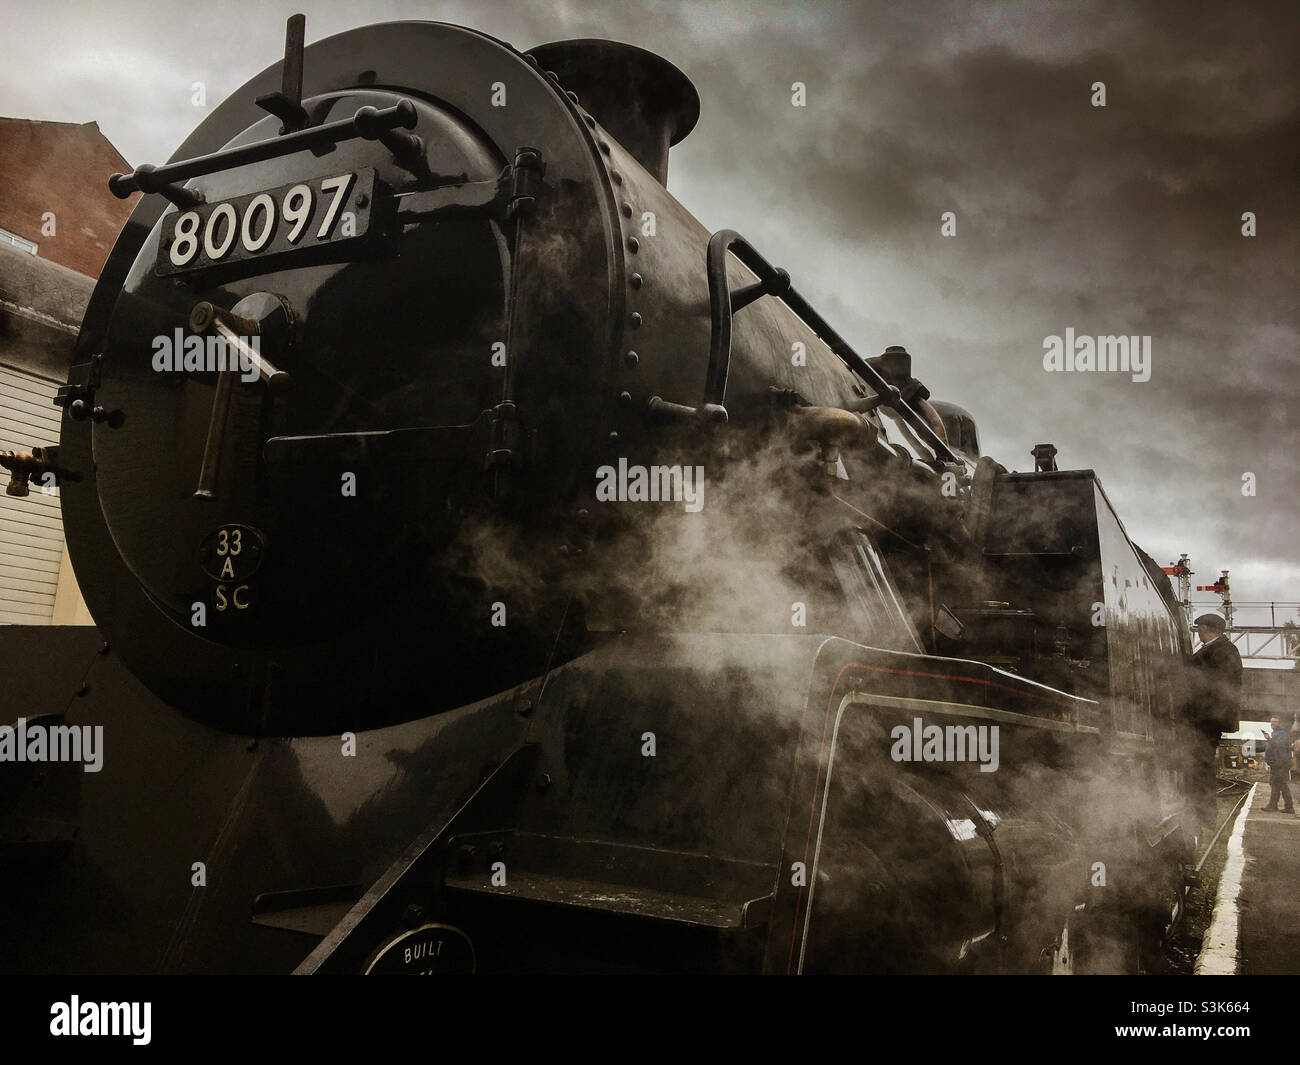 A steam train on the East Lancashire railway. Stock Photo